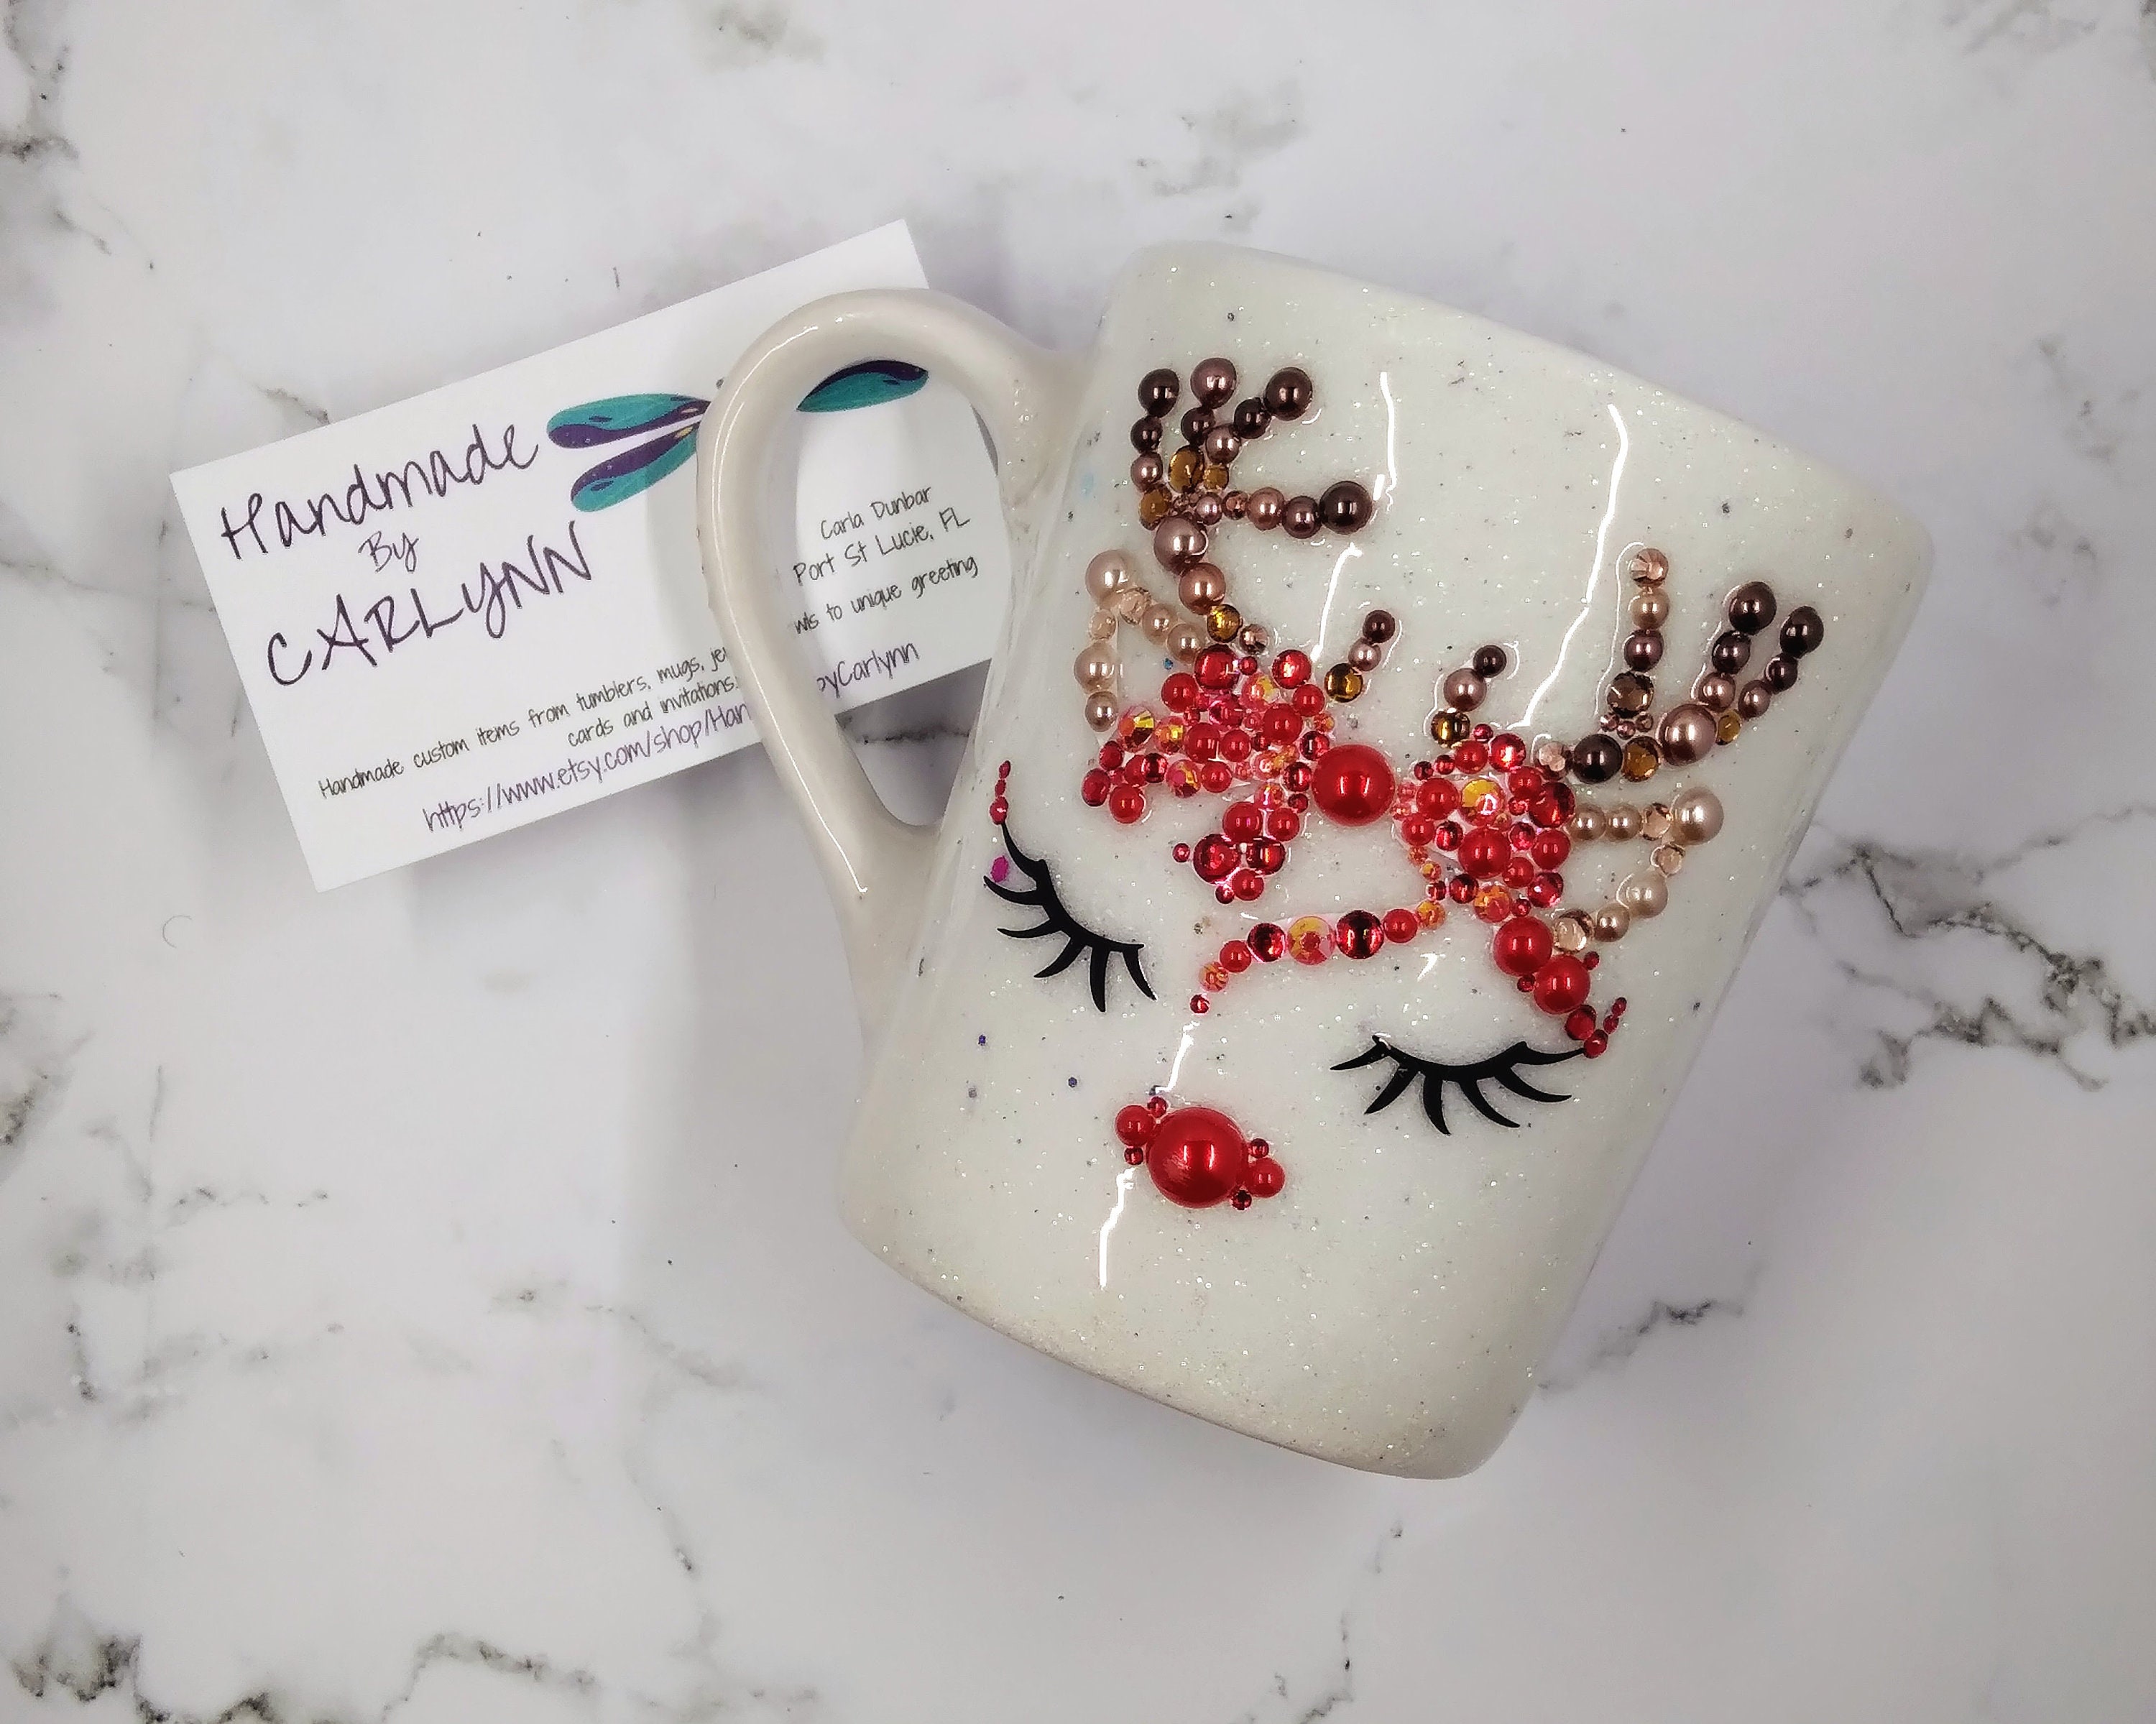 Glitter Coffee Mug/purple Coffee Mug/purple Mug/glitter Coffee Mug/pink  Glitter Coffee Mug/teal Coffee Mug/epoxy /girly Mug 